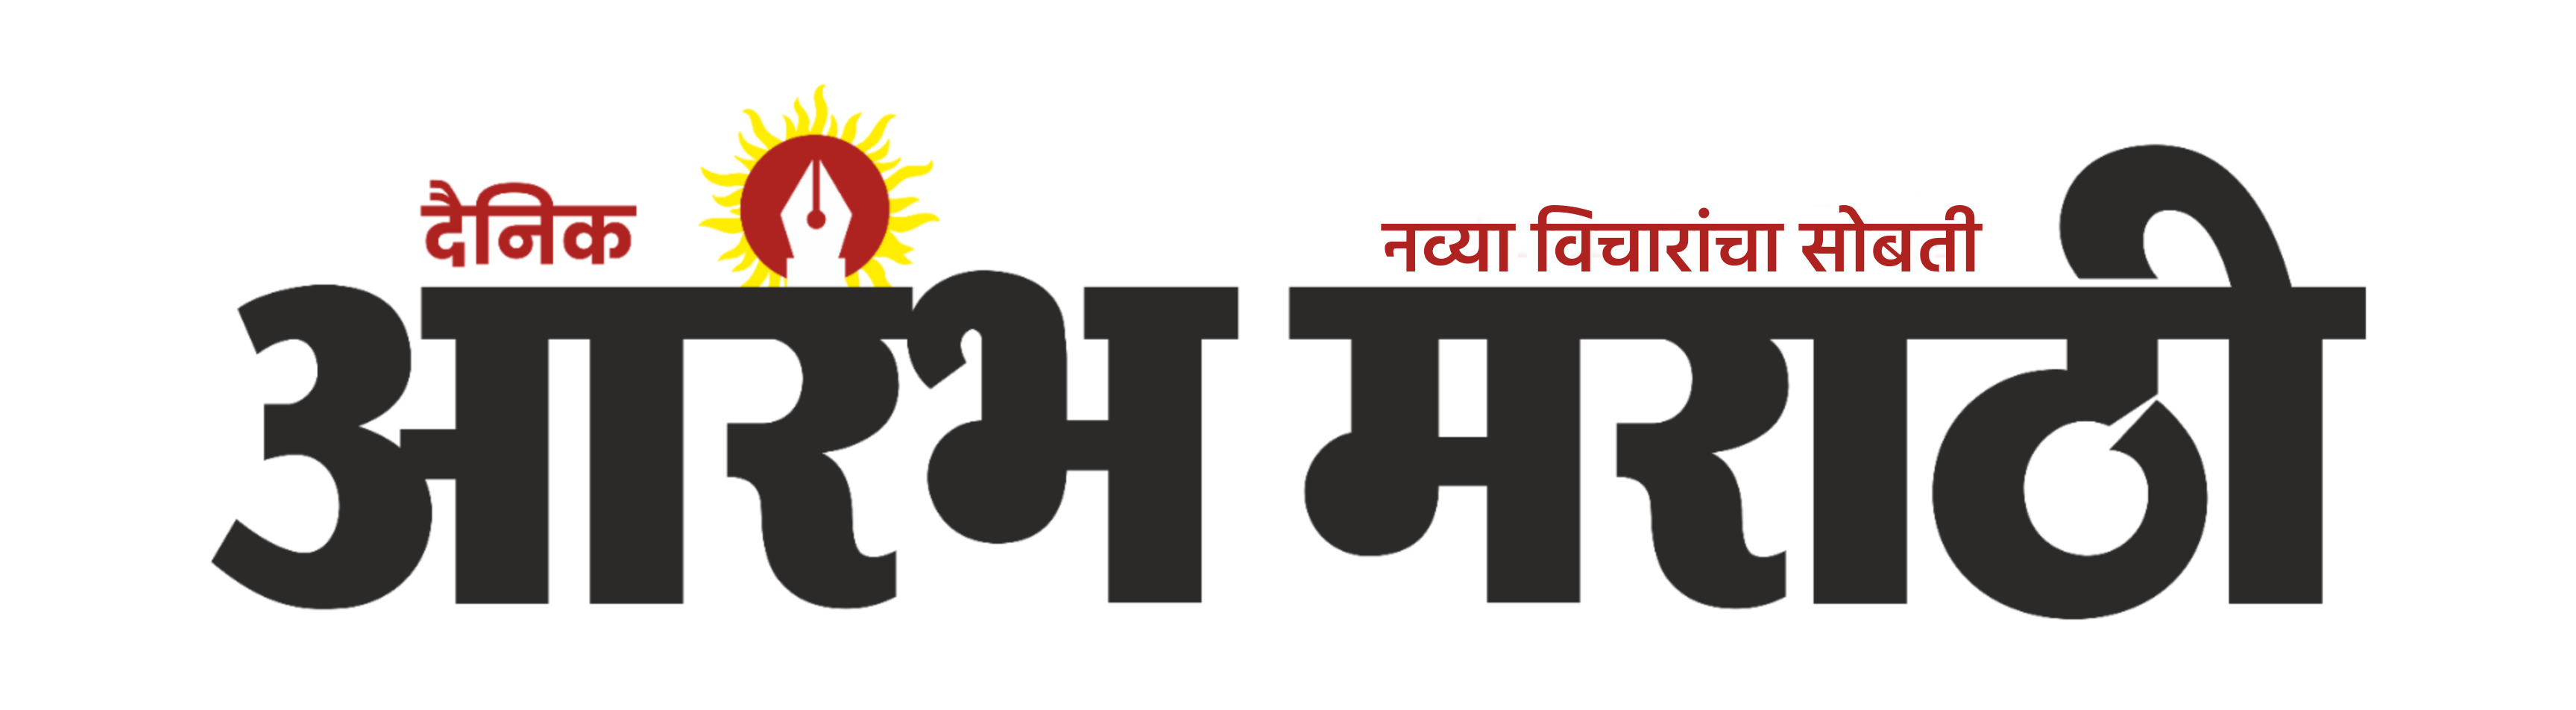 Arambh Marathi